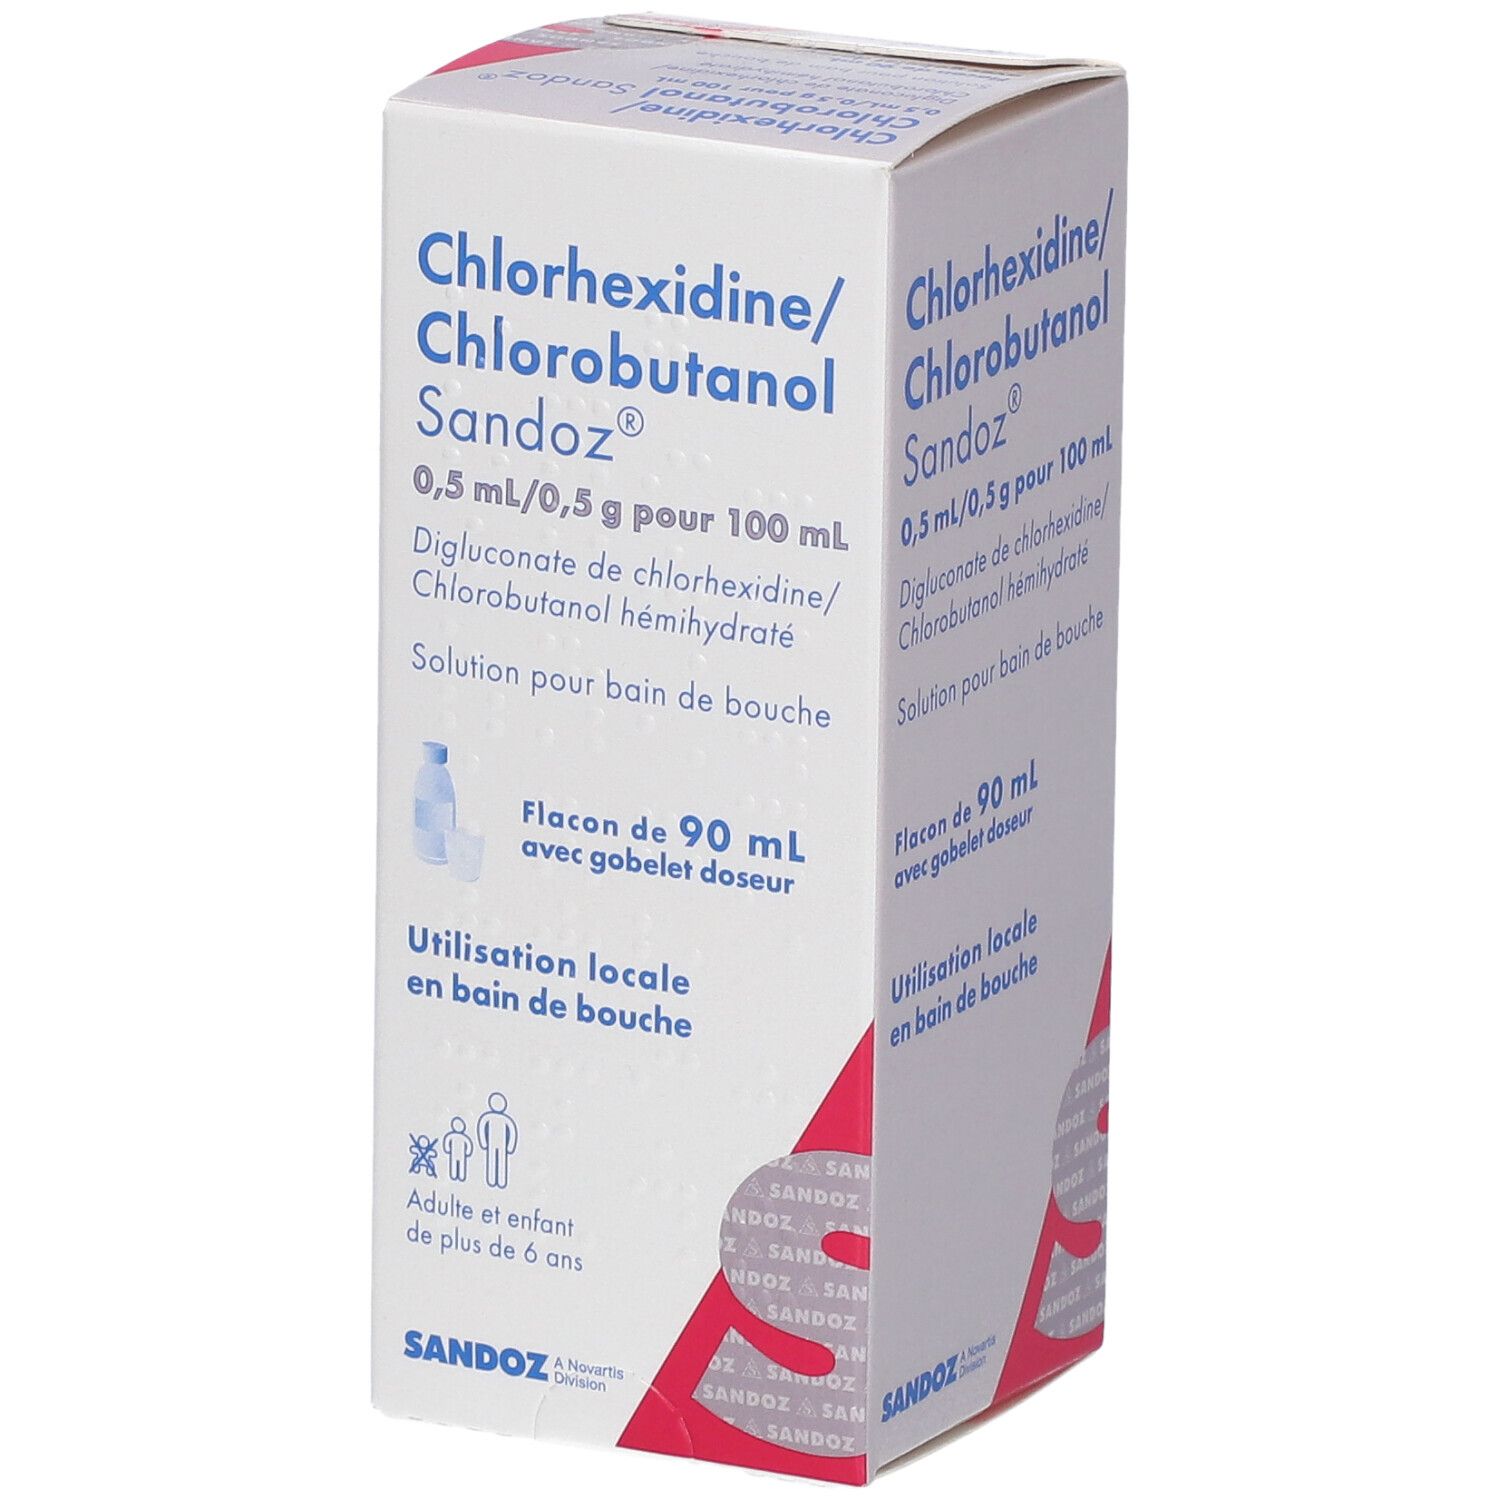 Chlorhexidine/Chlorobutanol Sandoz® Bain de bouche